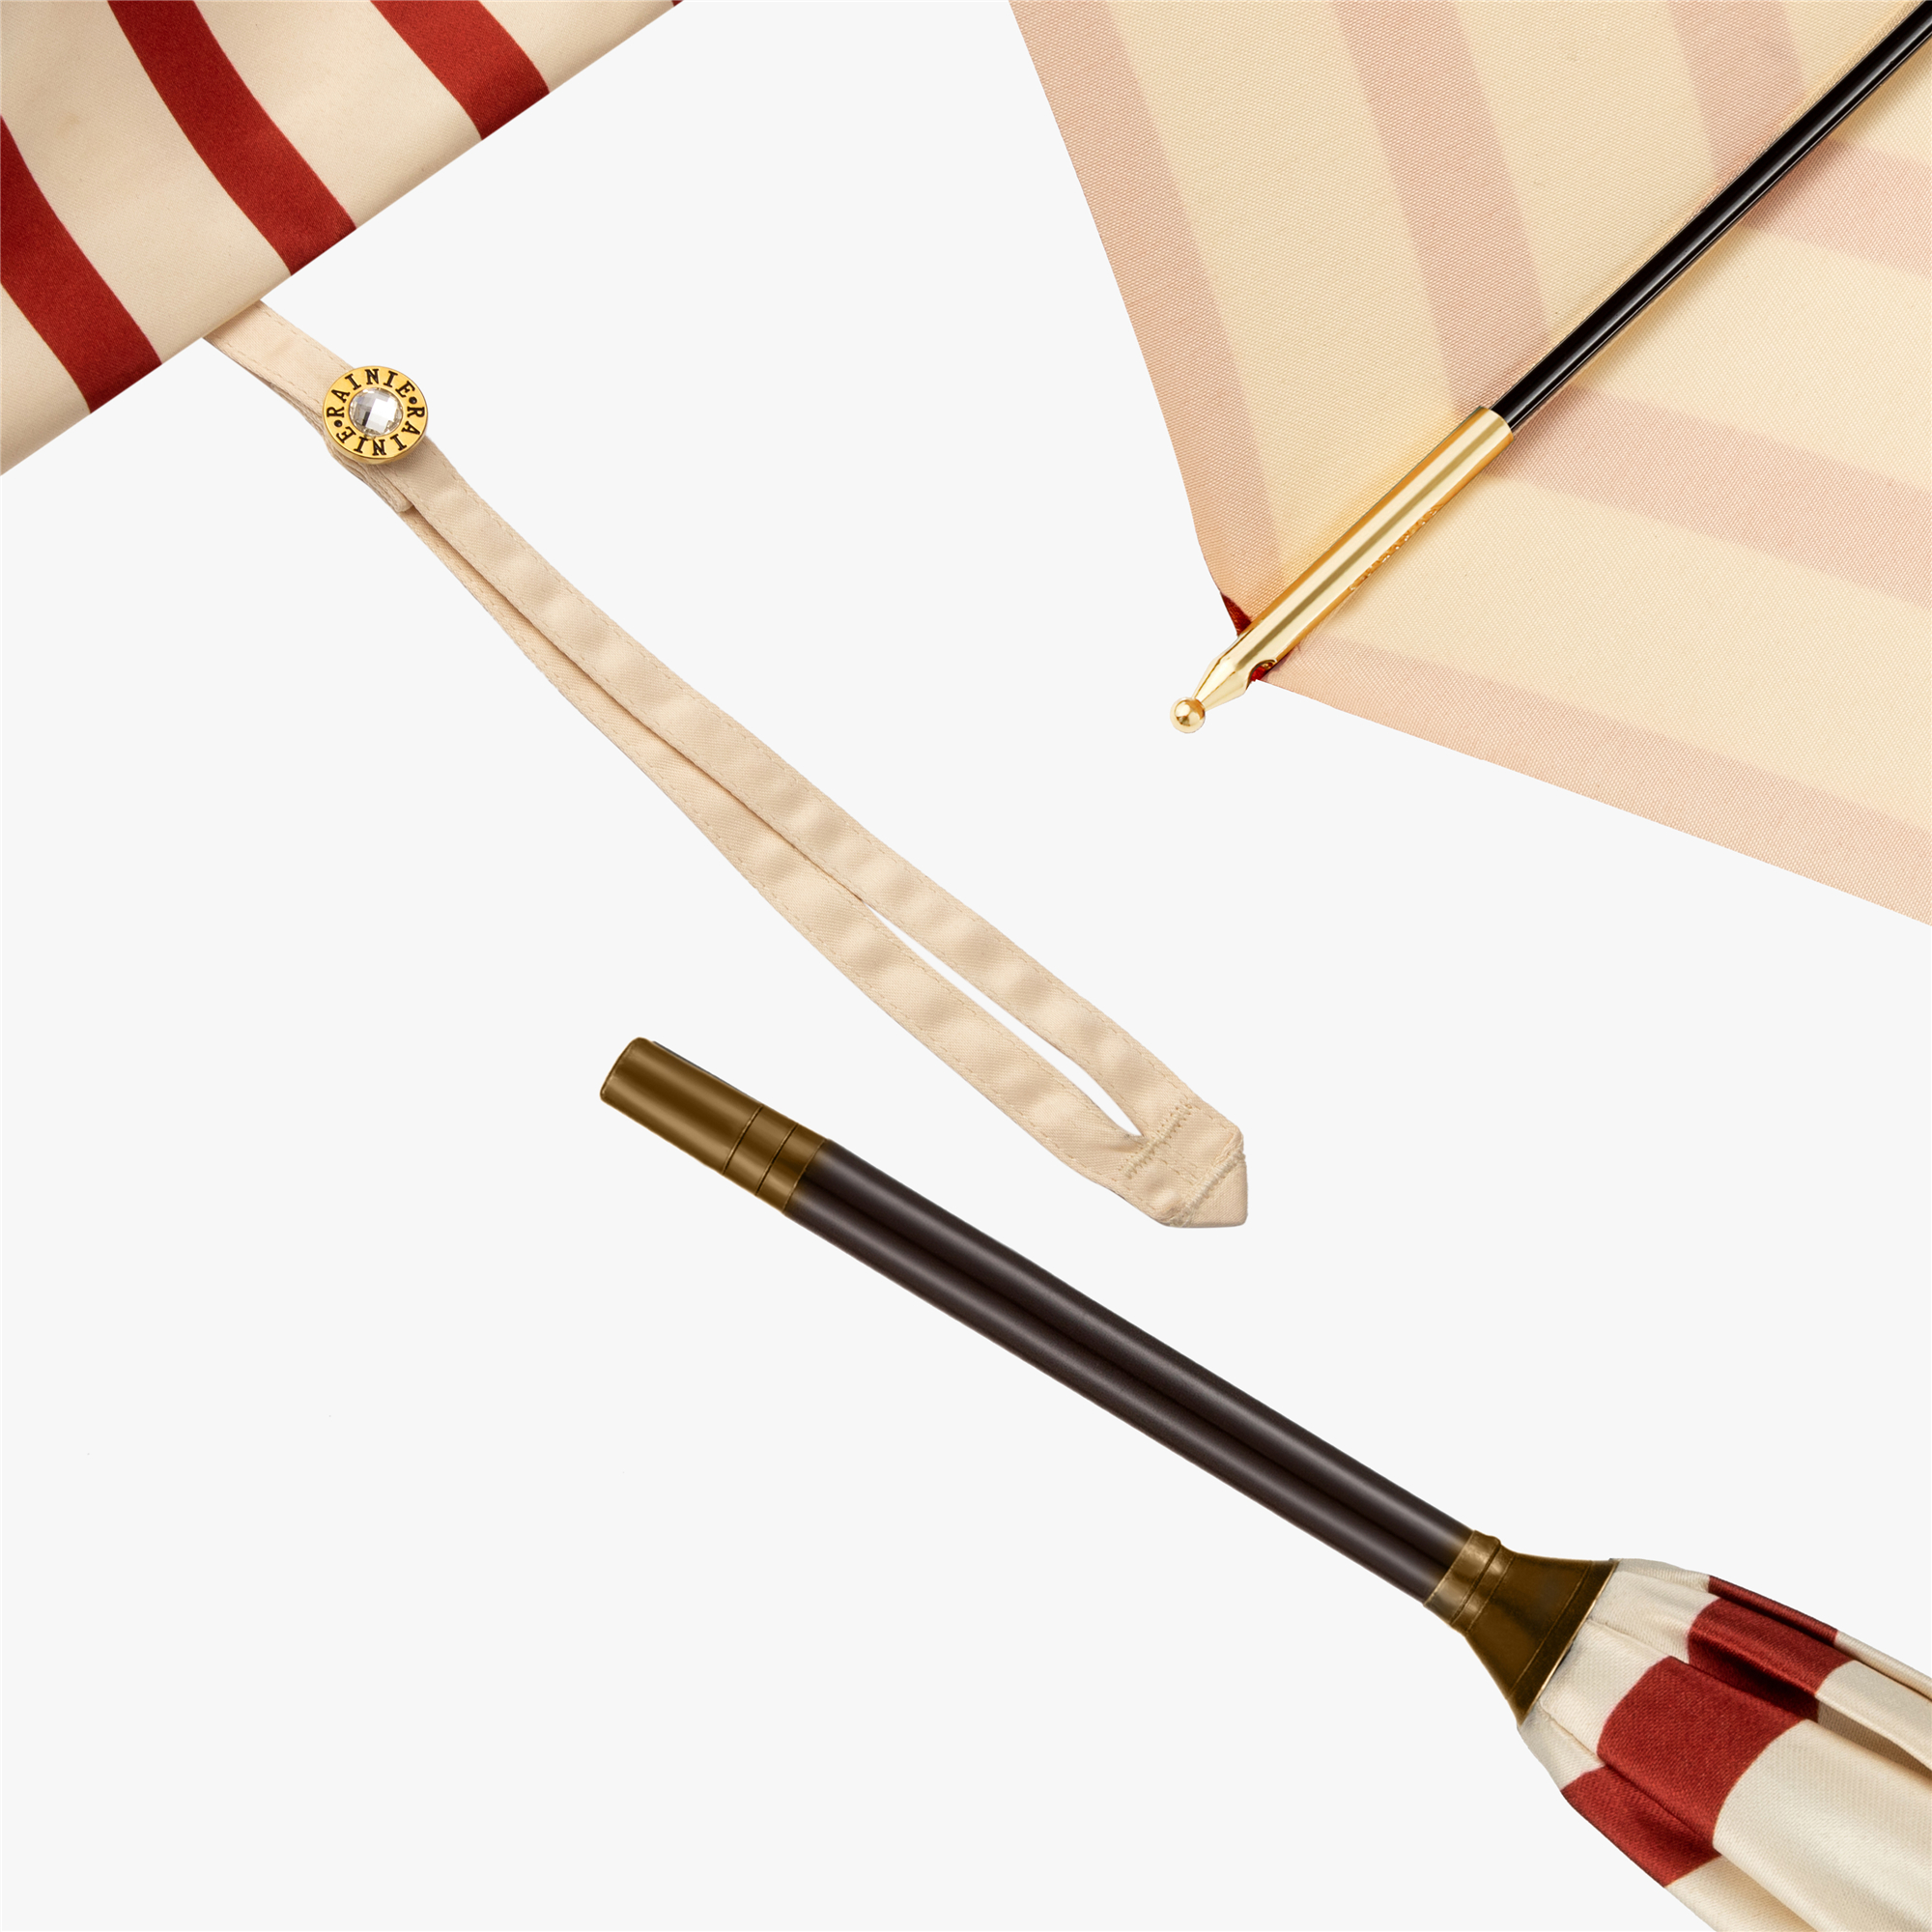 Straight bamboo umbrella with straight handle